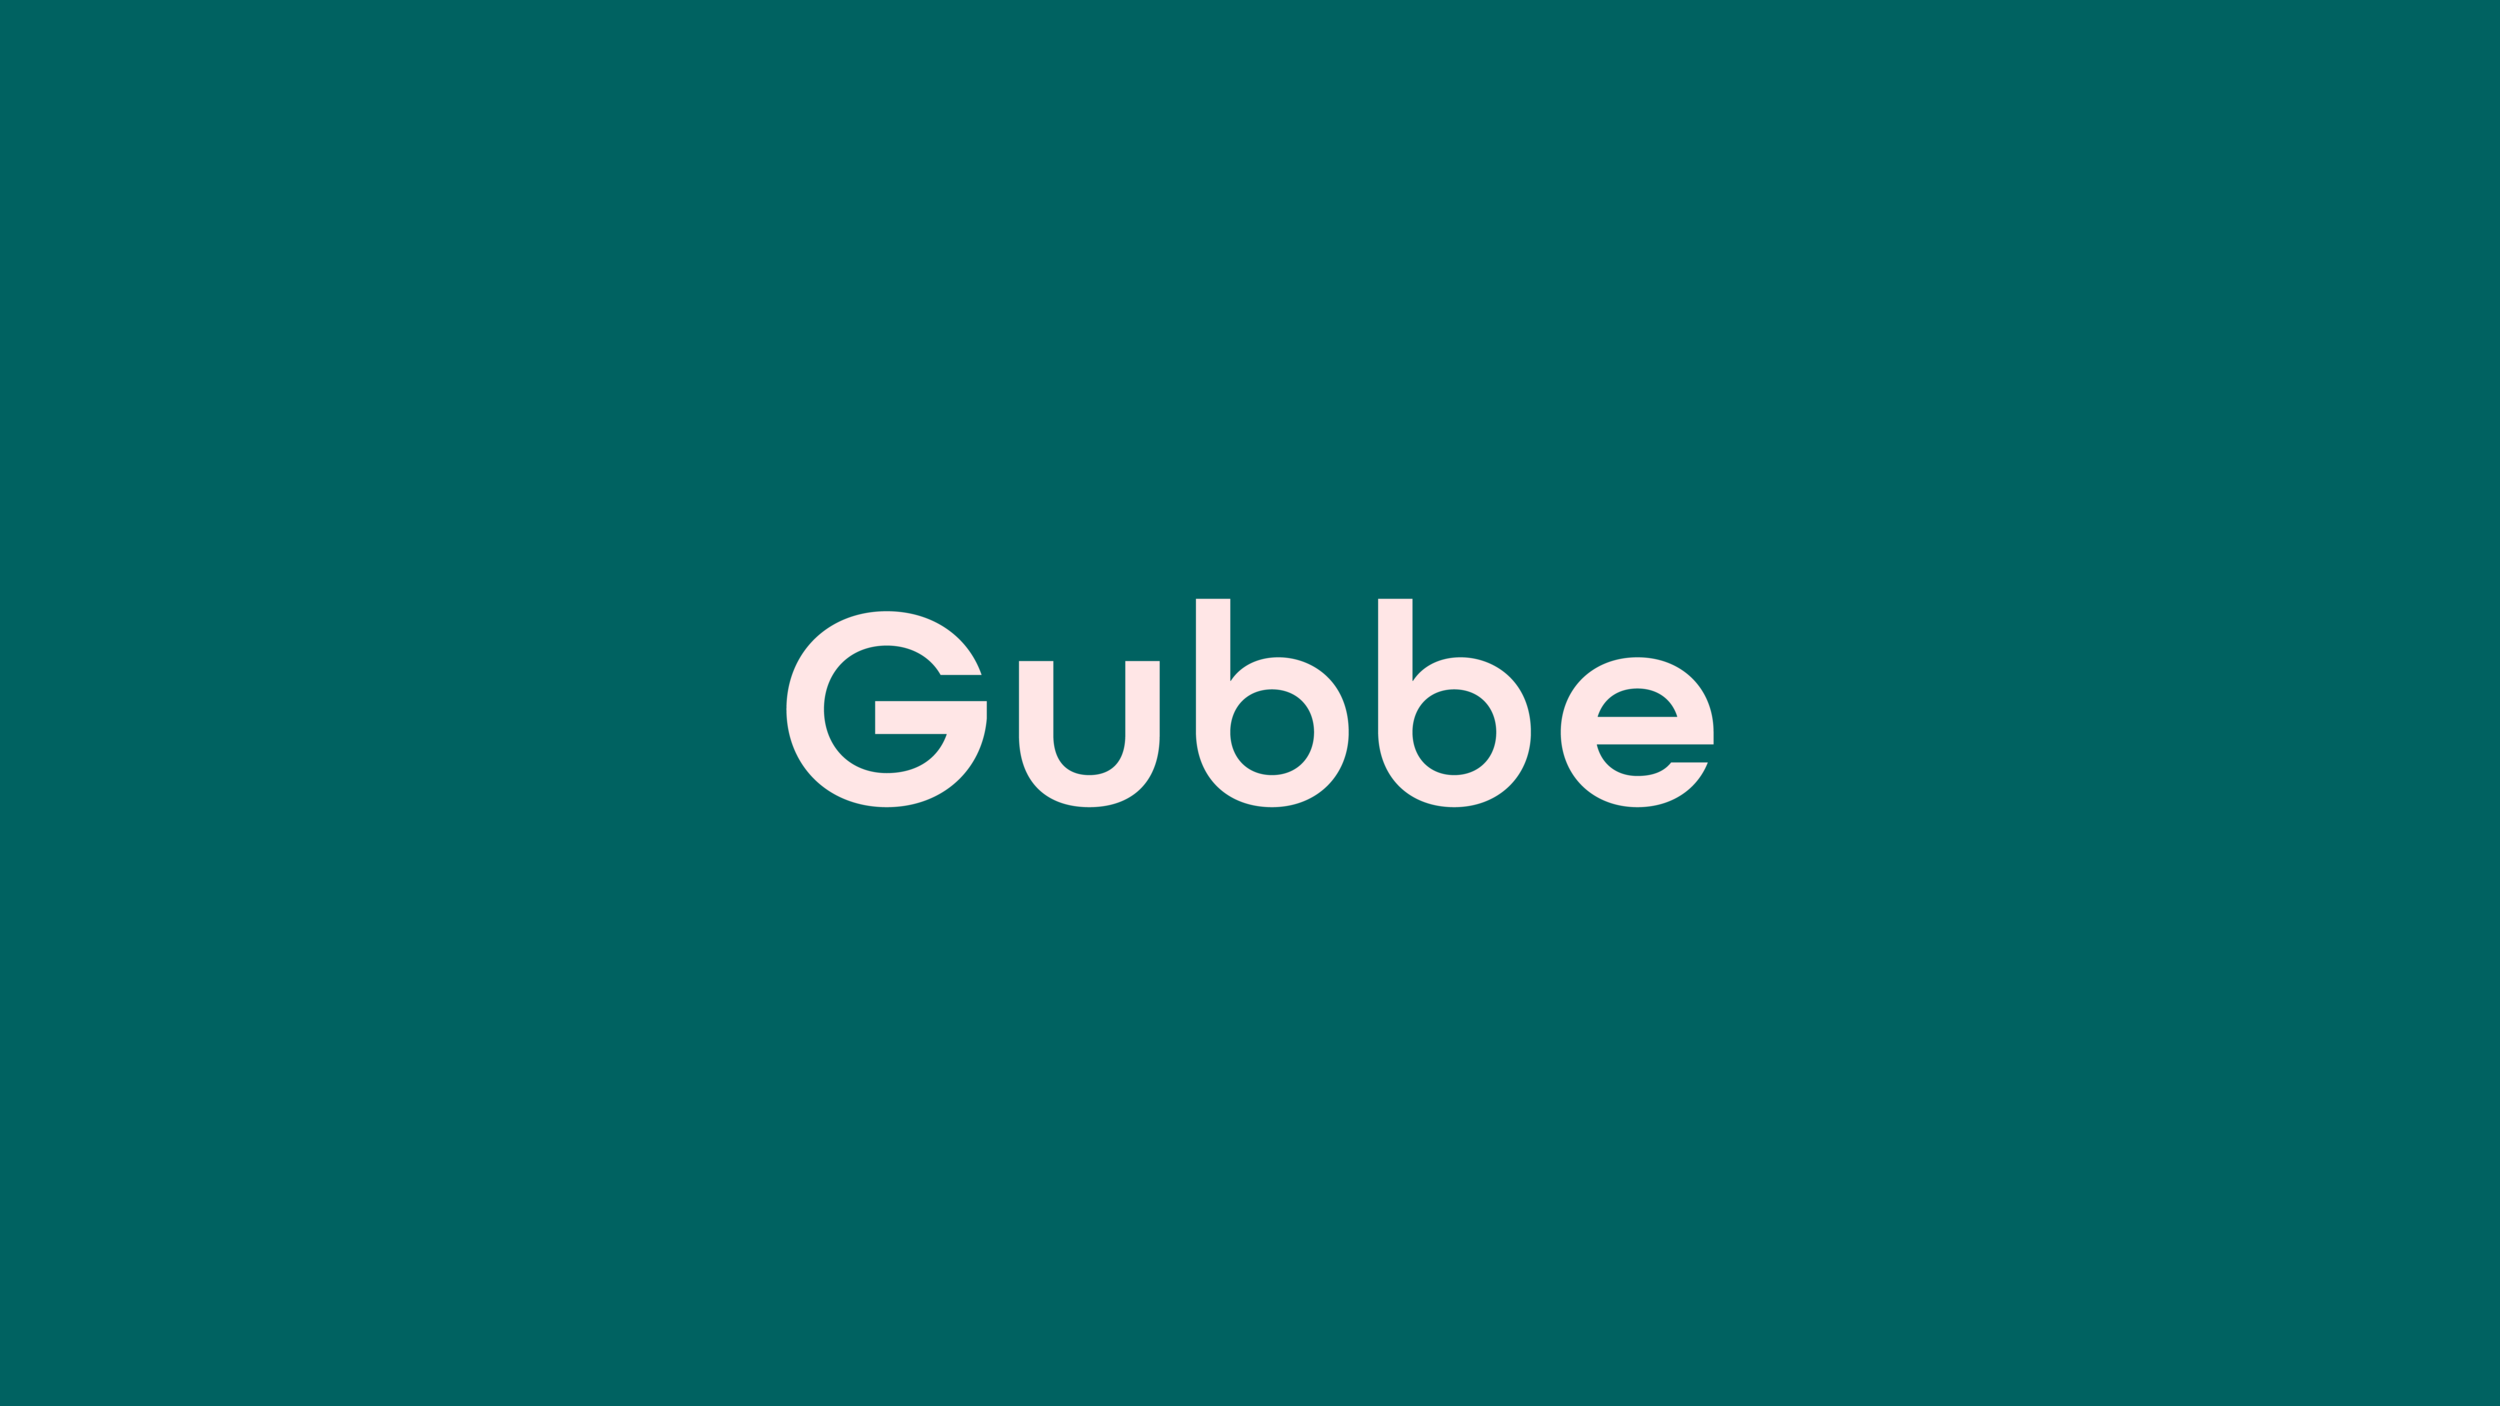 gubbe logo-01.png